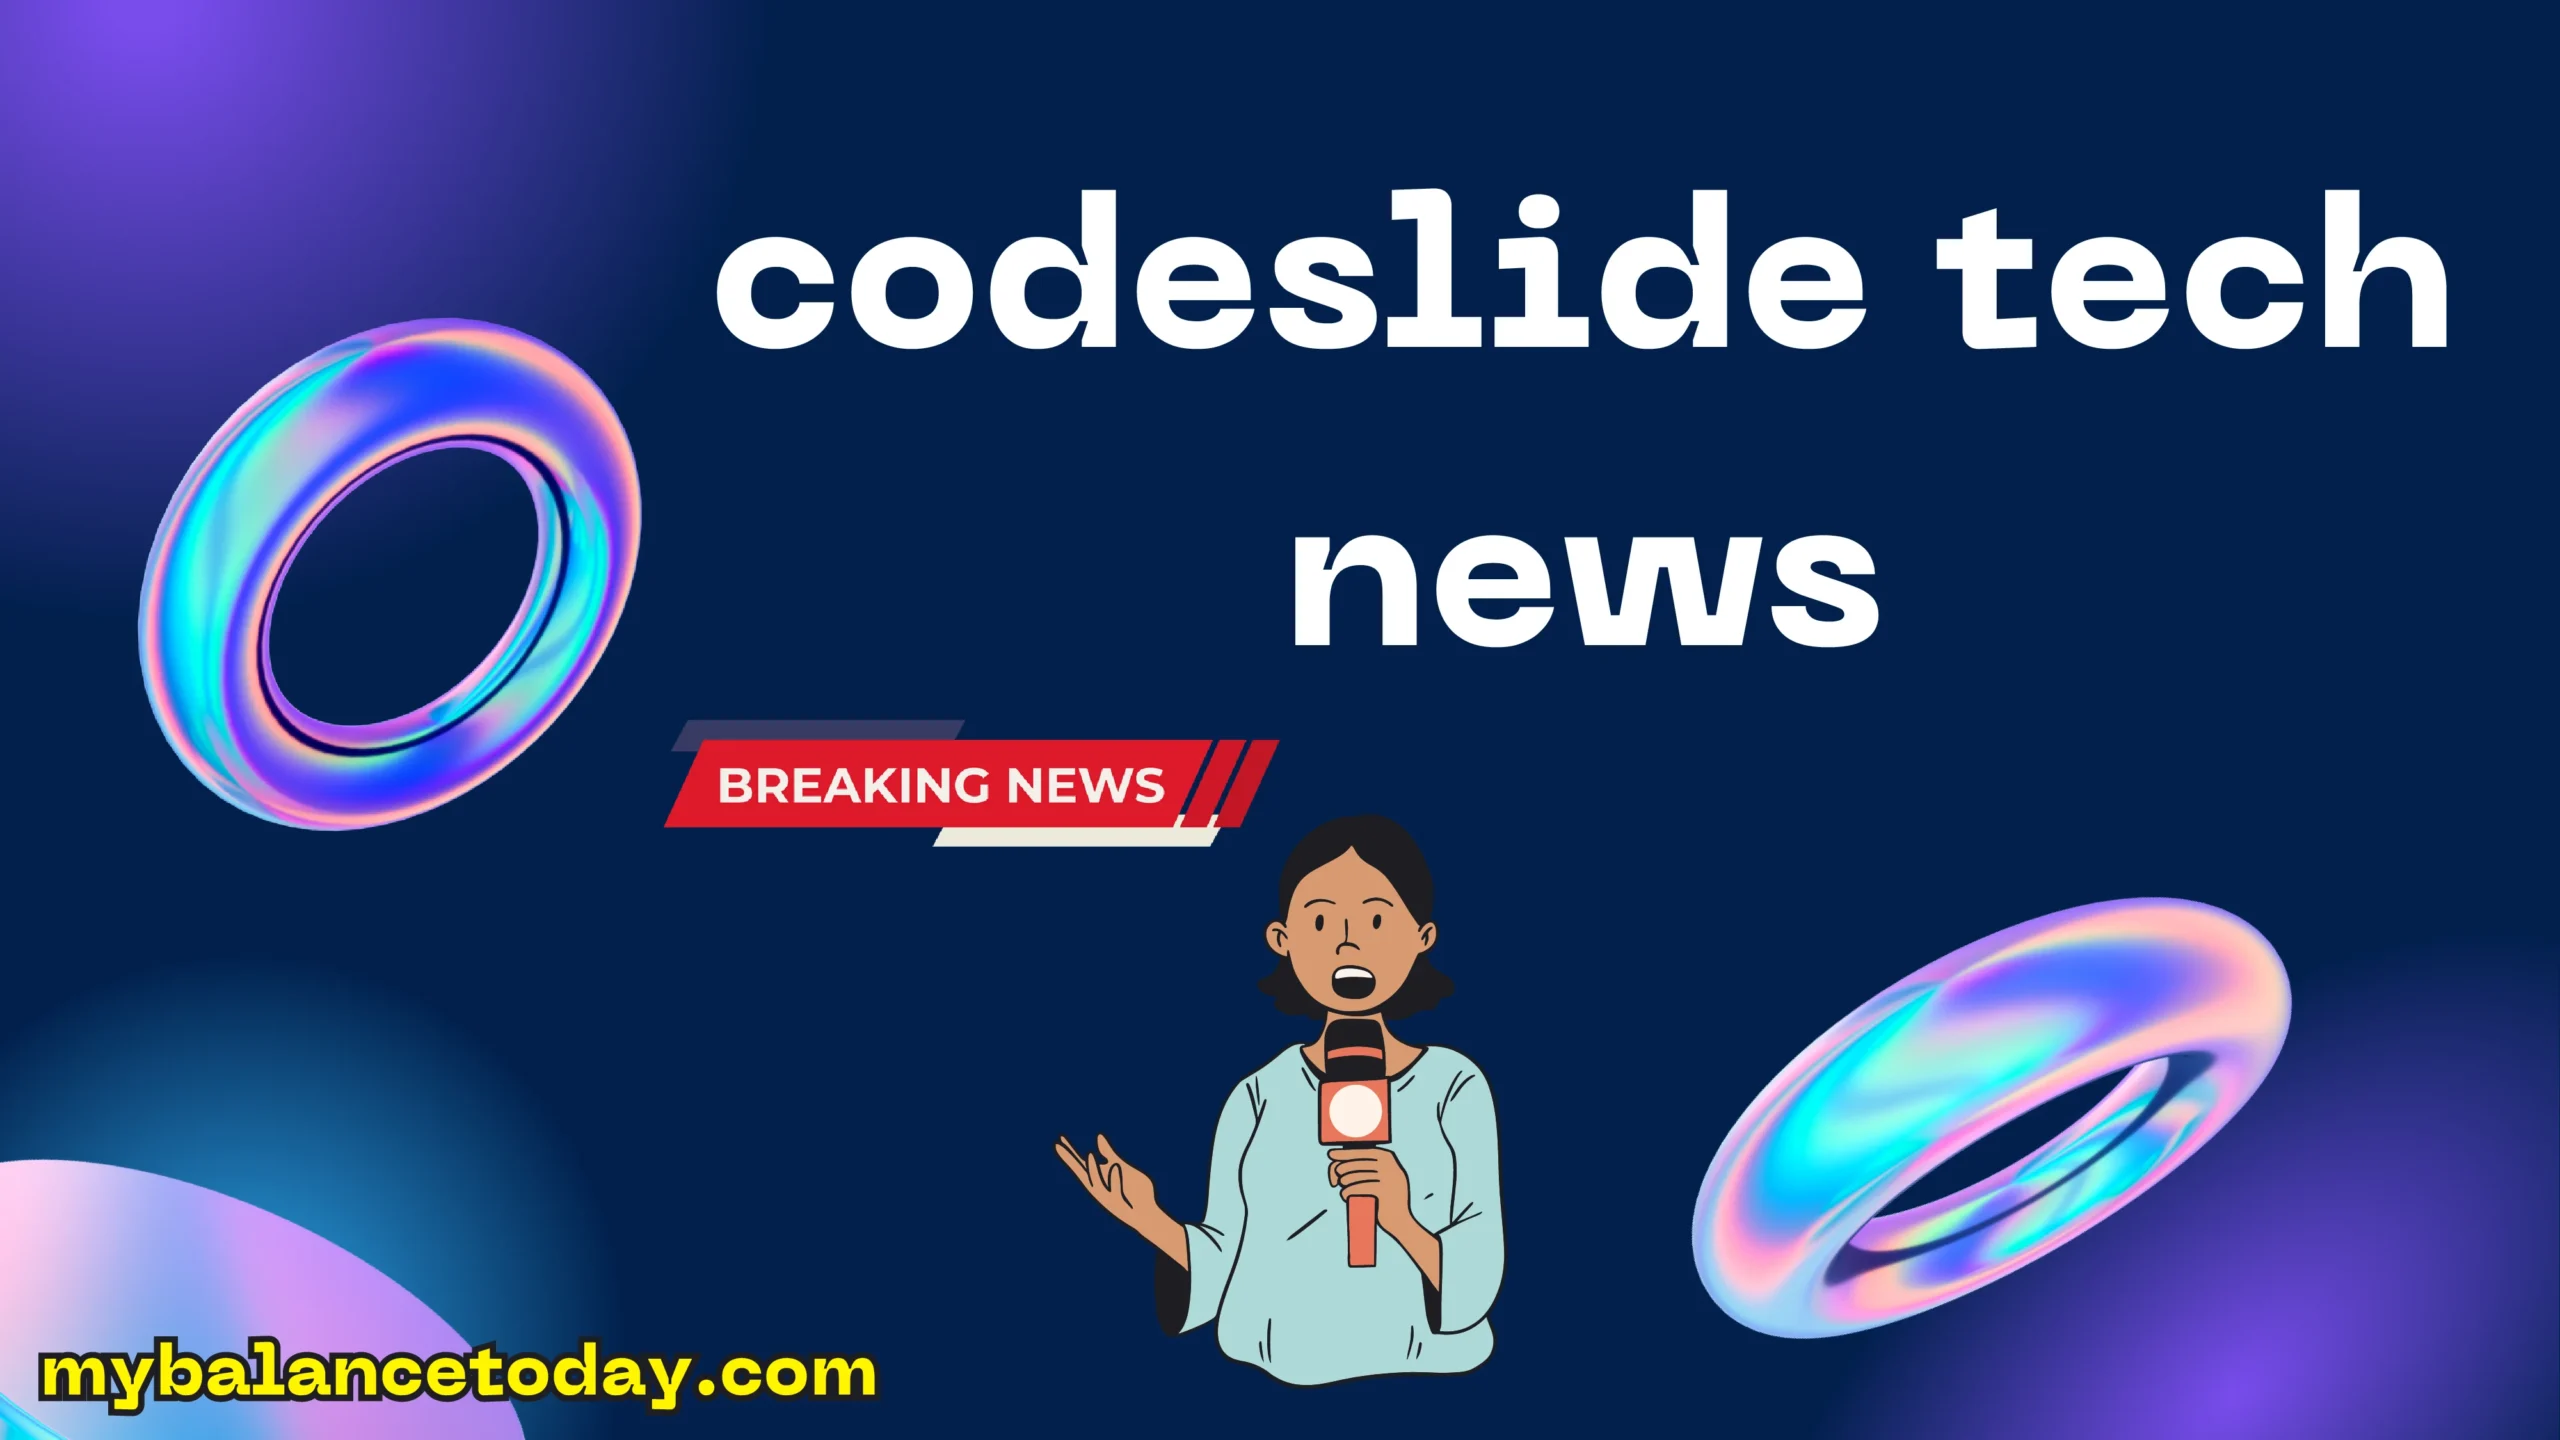 CodeSlide Tech News Education and Innovation